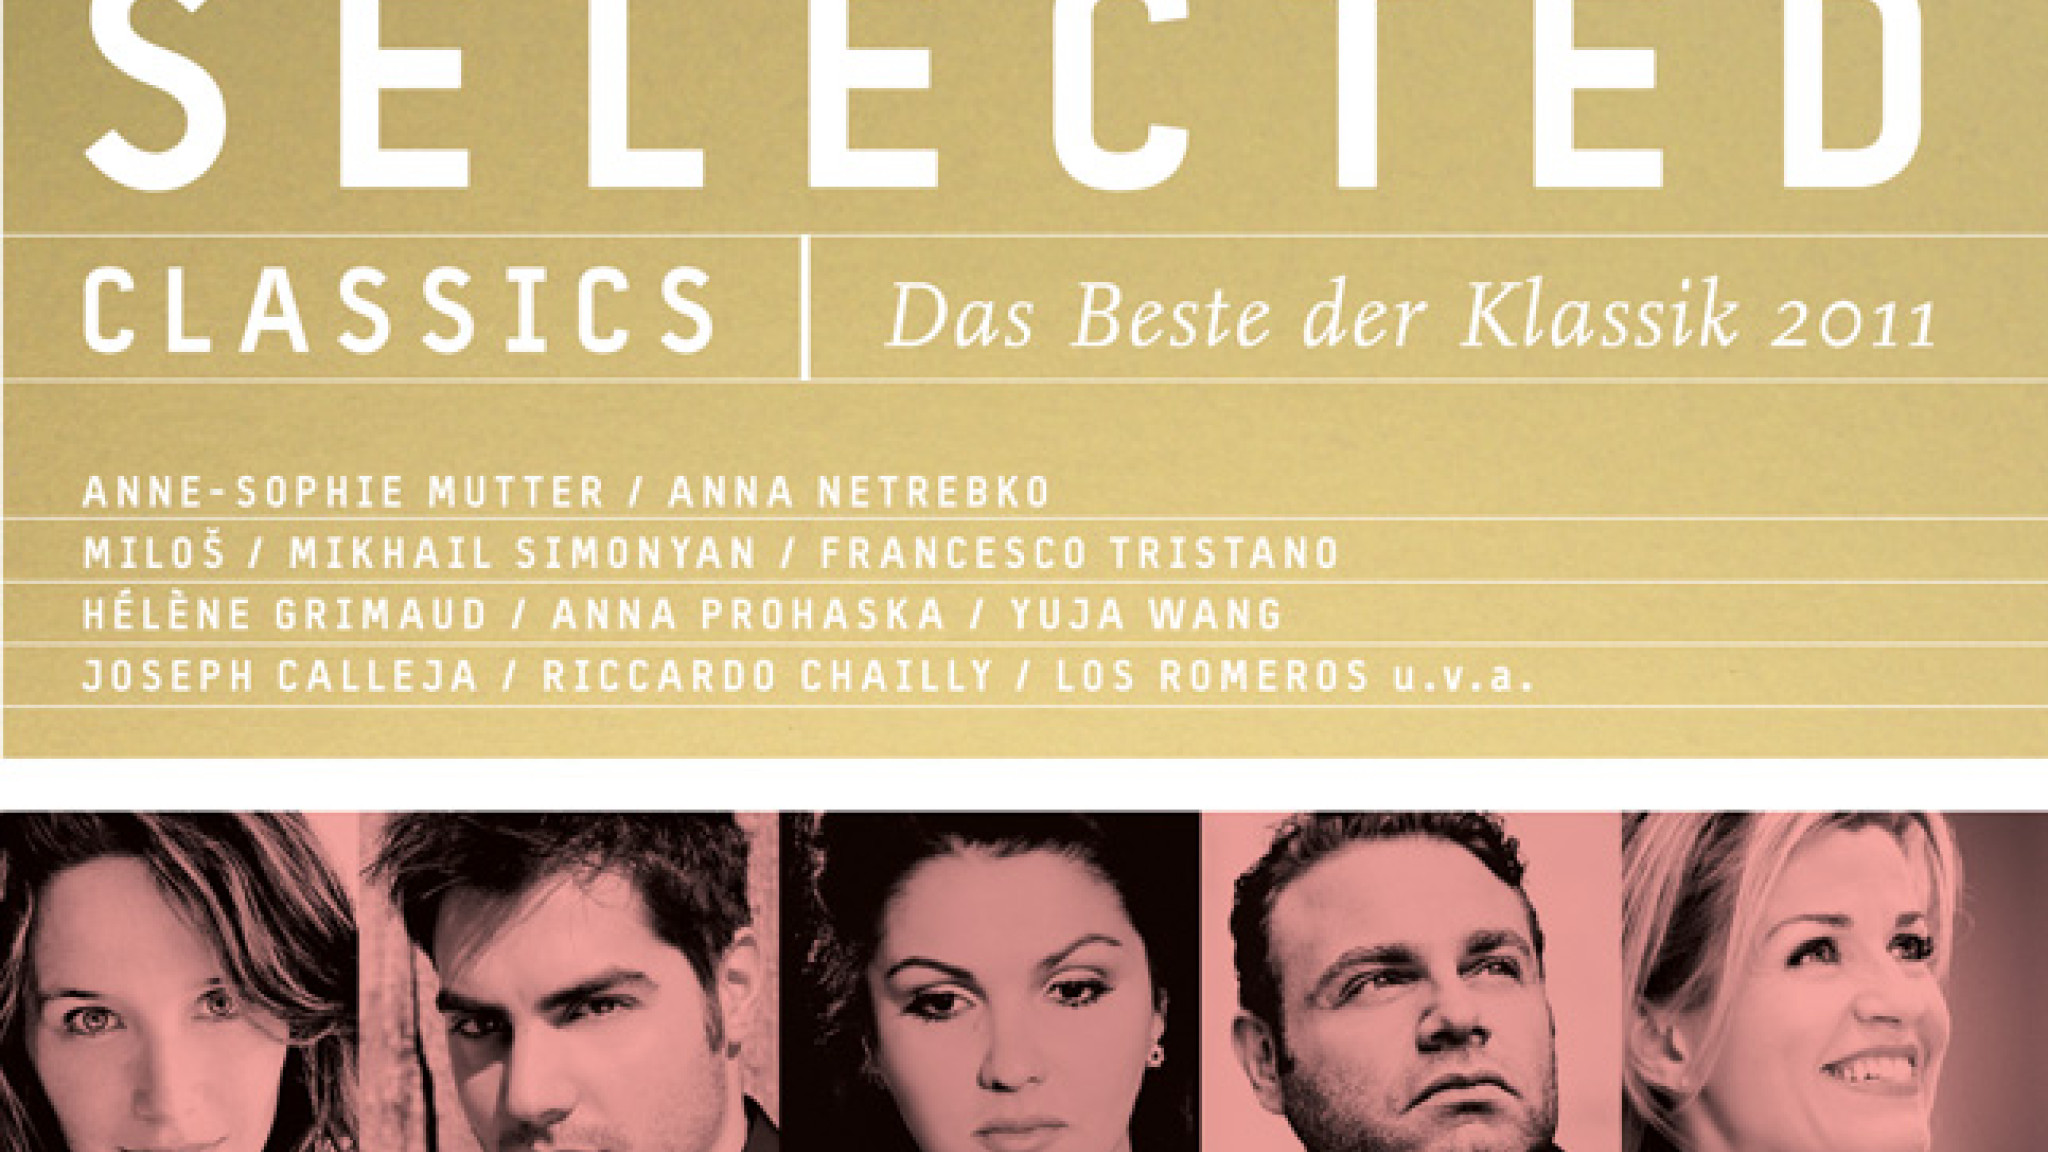 Selected Classics 2011